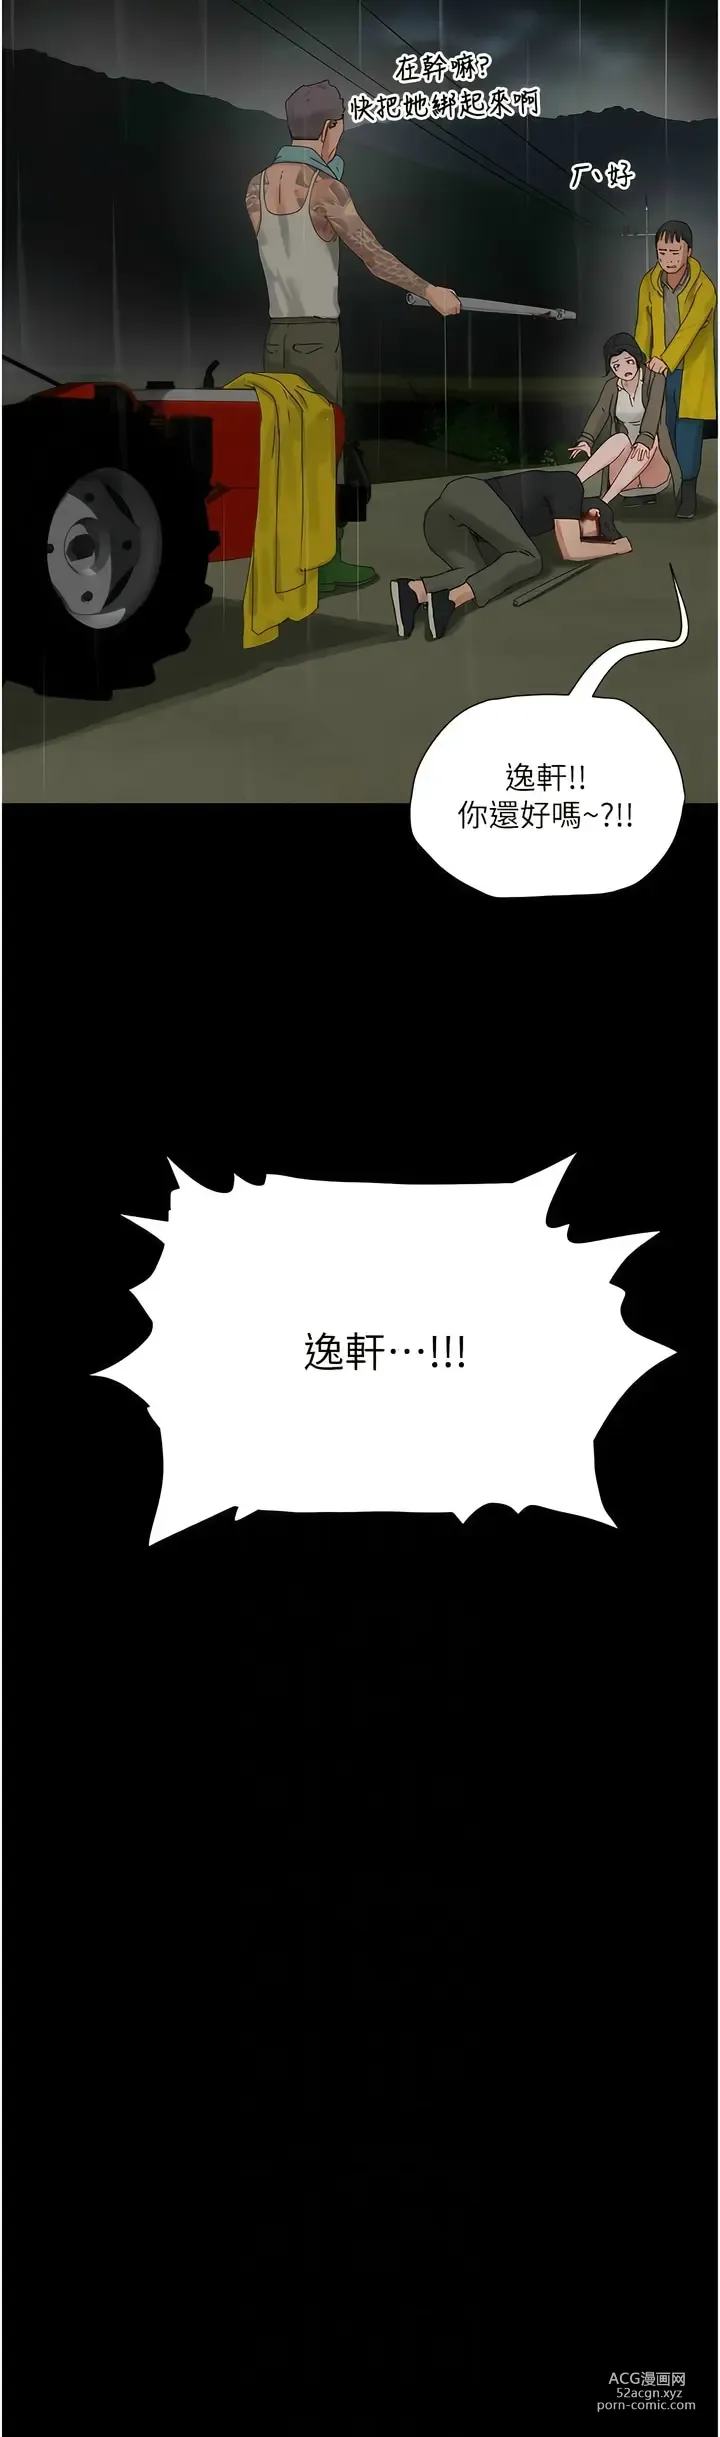 Page 905 of manga 夏日深处/Summer of Love 61-86